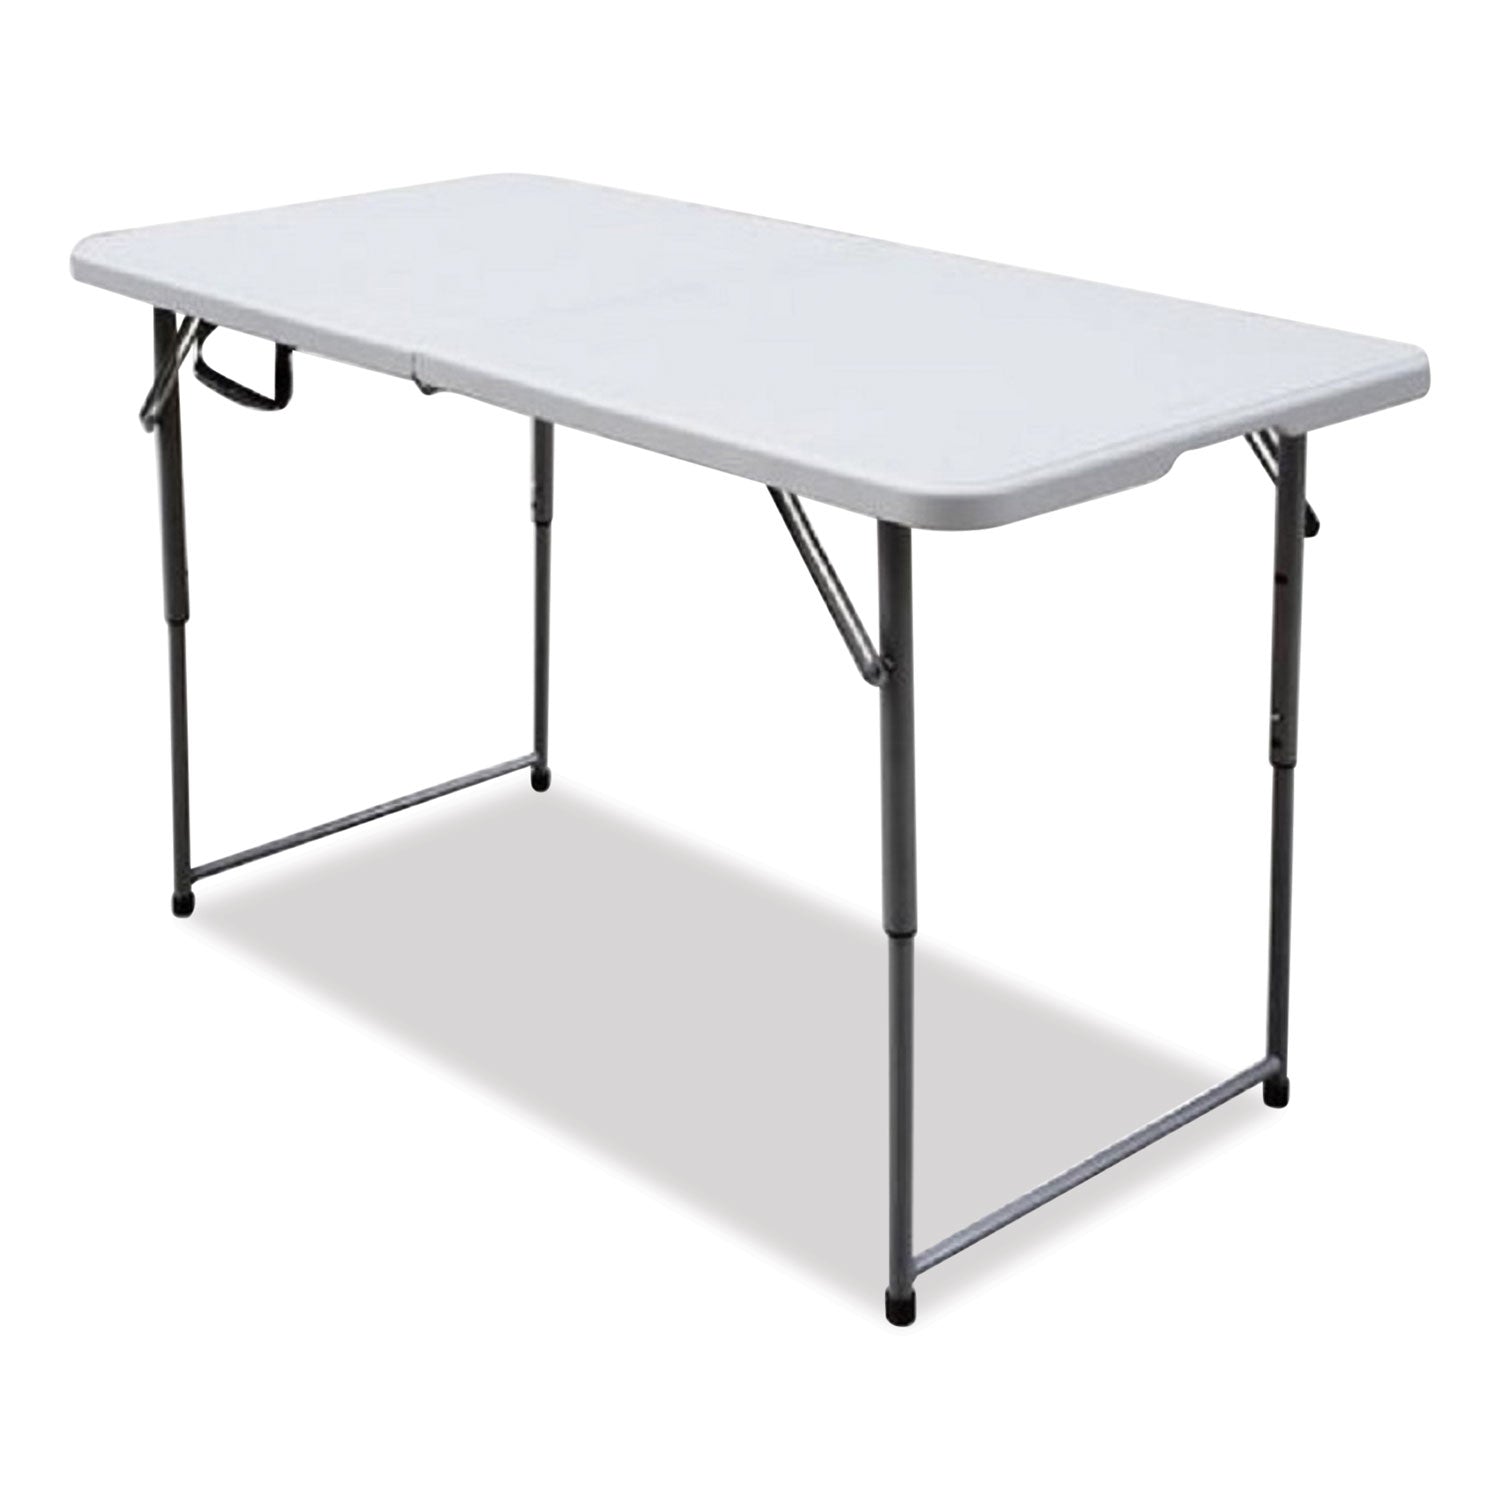 bifold-resin-folding-table-rectangular-48-x-236-x-291-white-granite-top-gray-base-legs-2-pack_ice61243 - 4